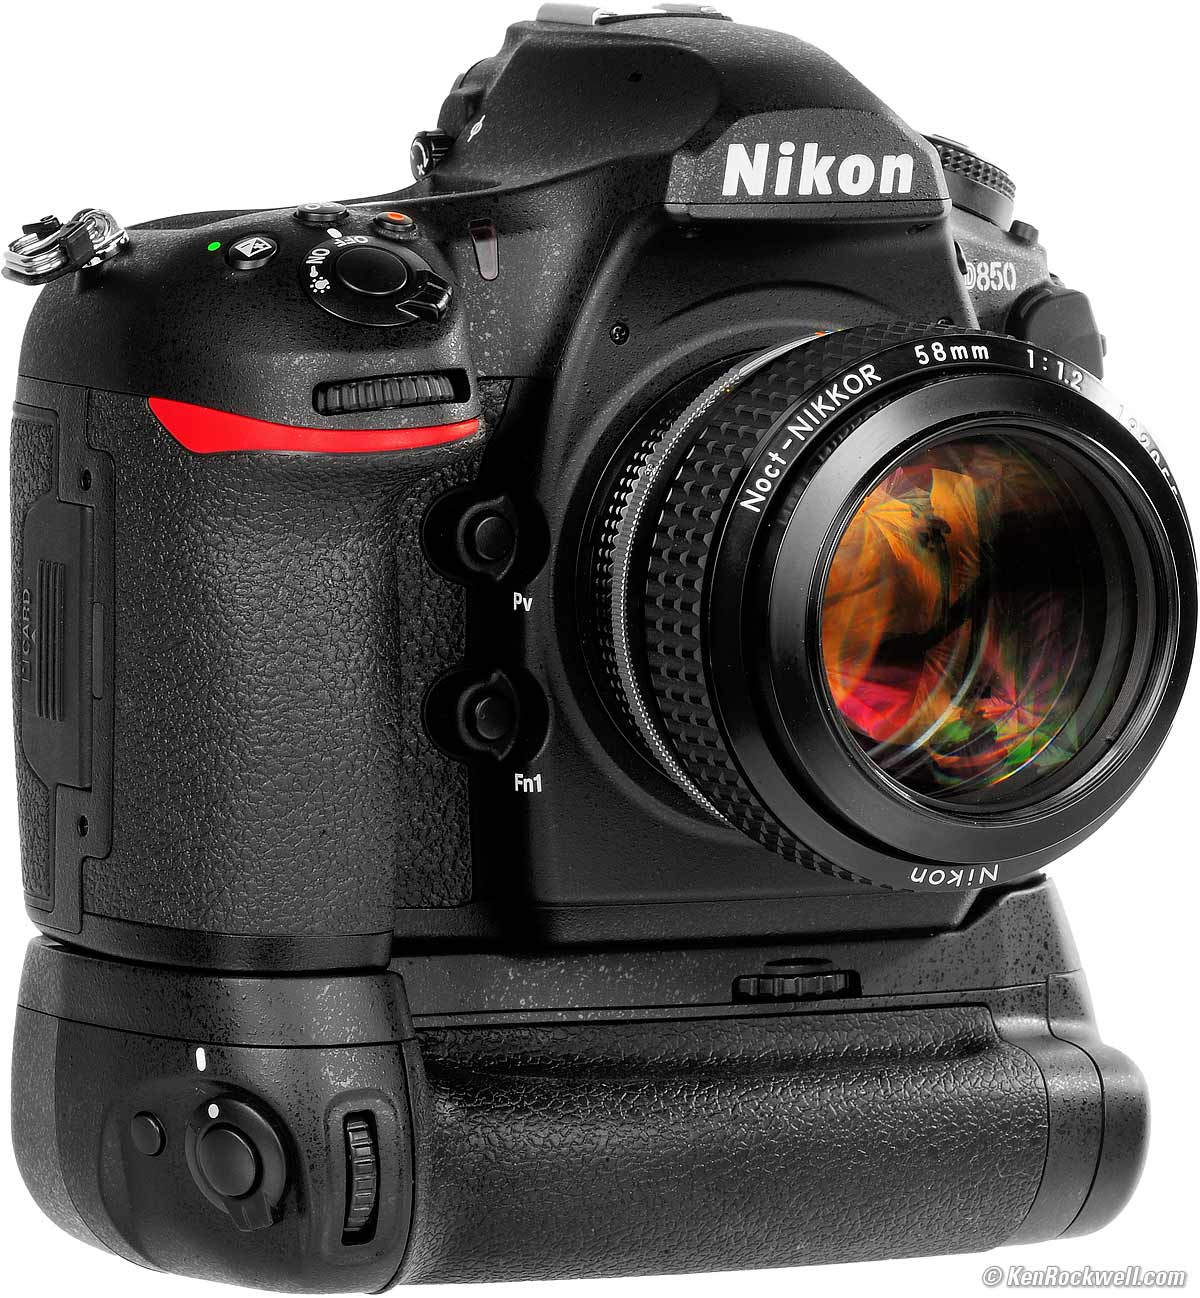 Review of the Nikon D850 DSLR